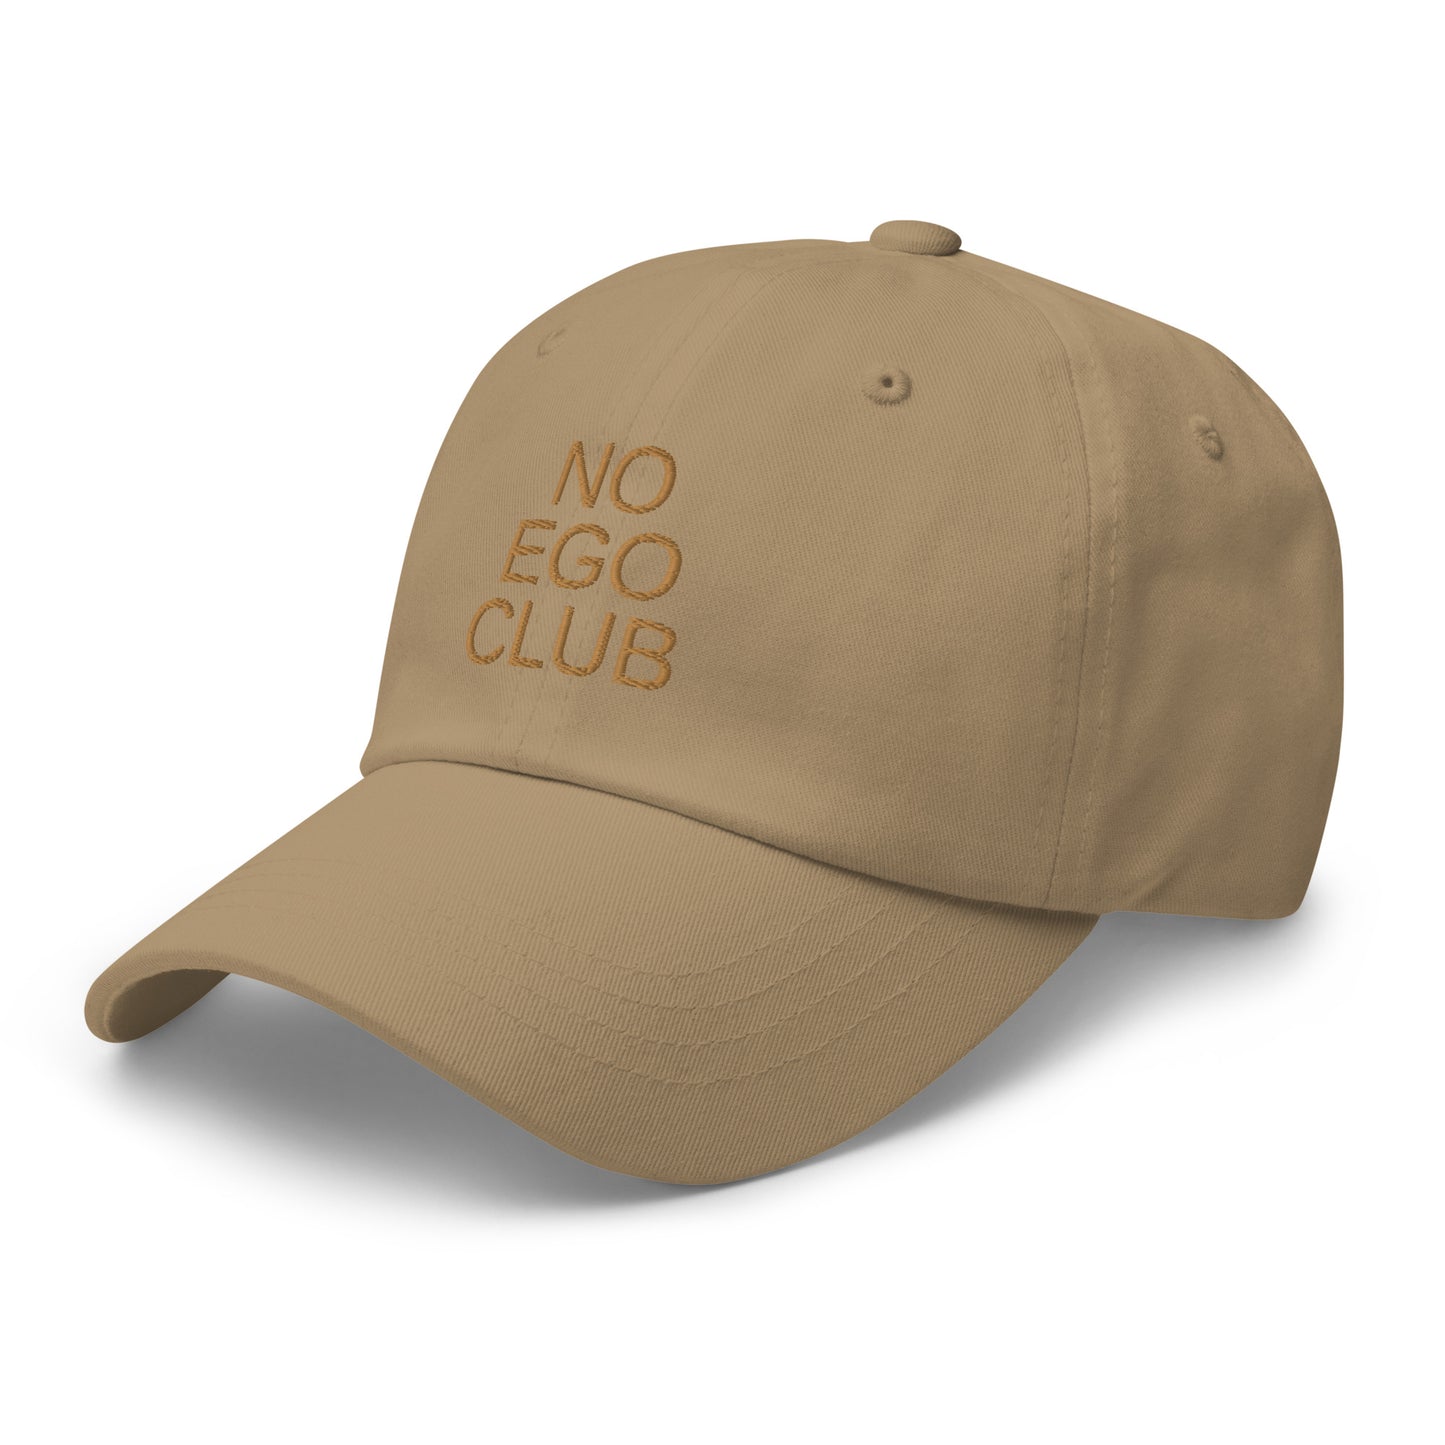 No Ego Club dad hat. Clothes With Words apparel.